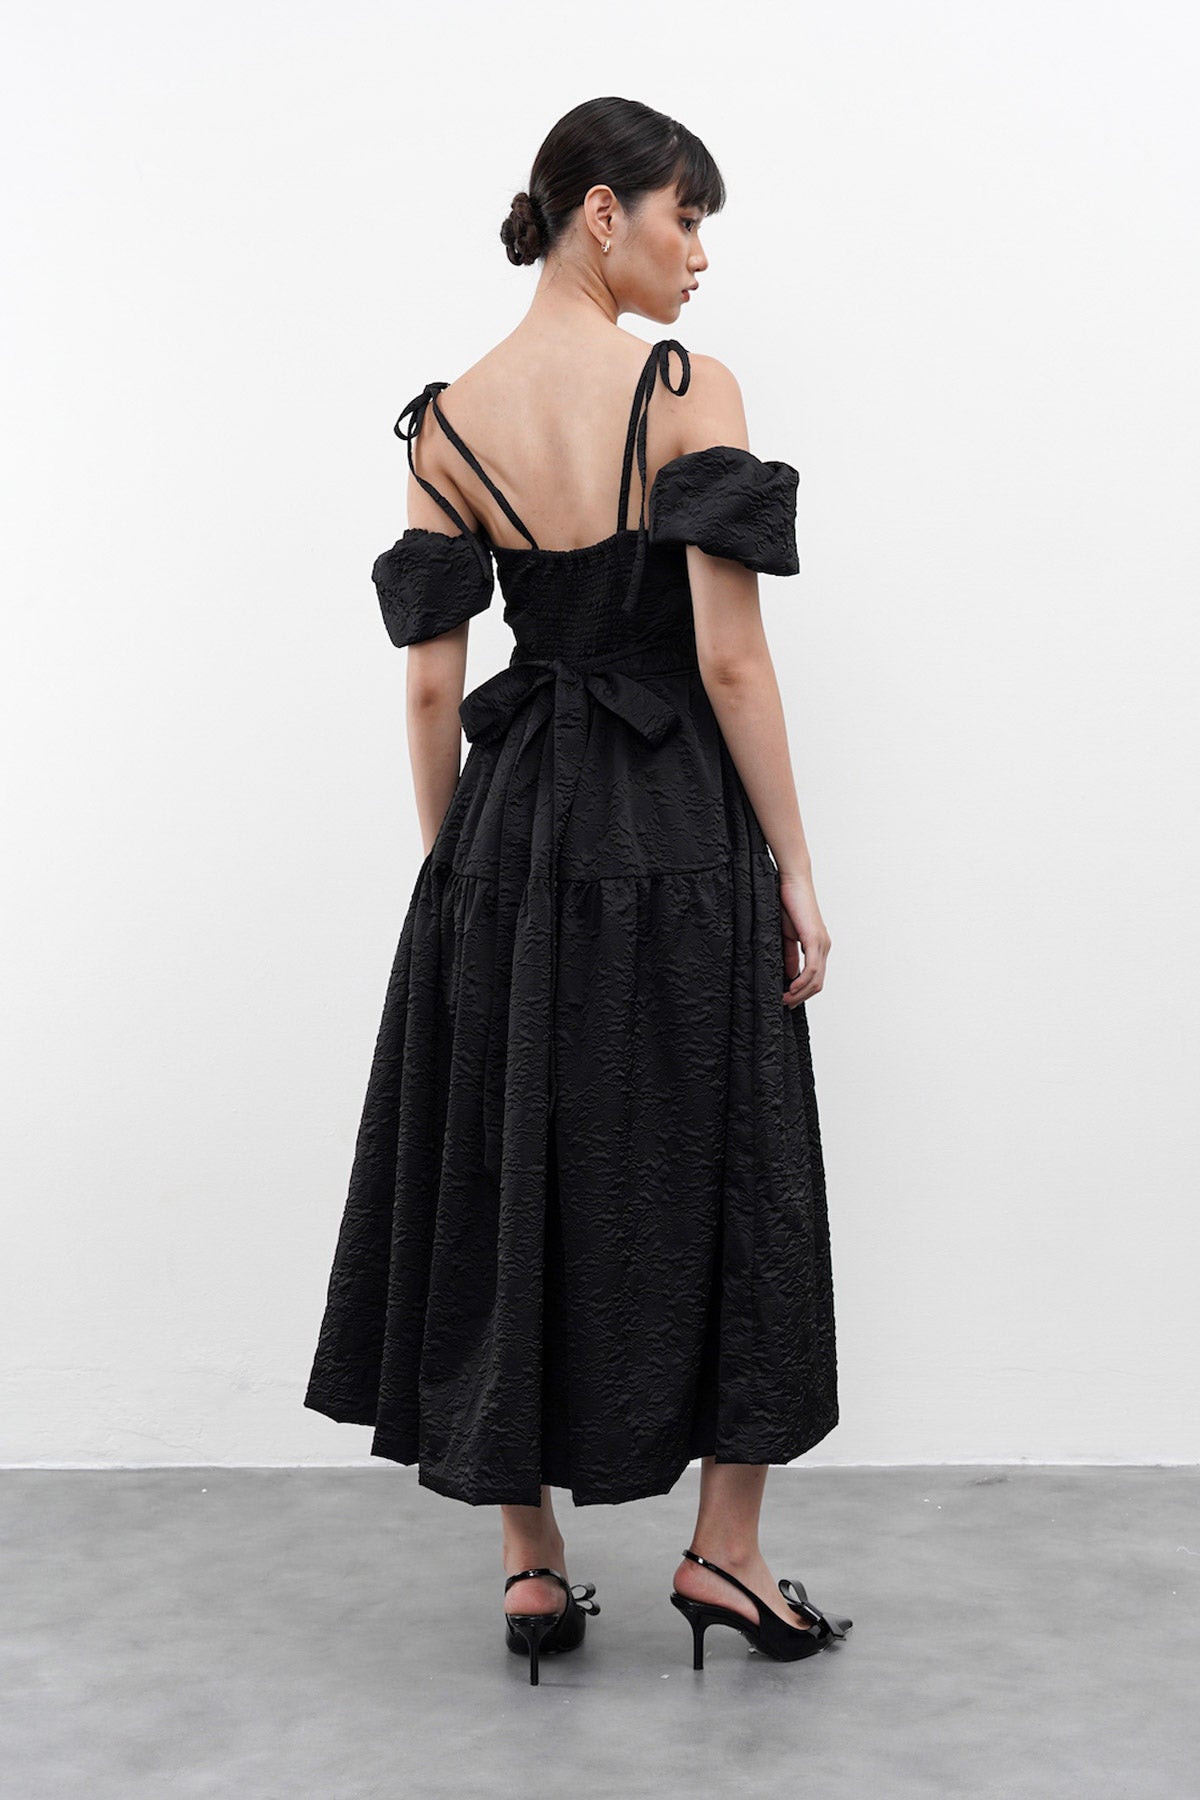 Messalina Dress in Black (3 LEFT)